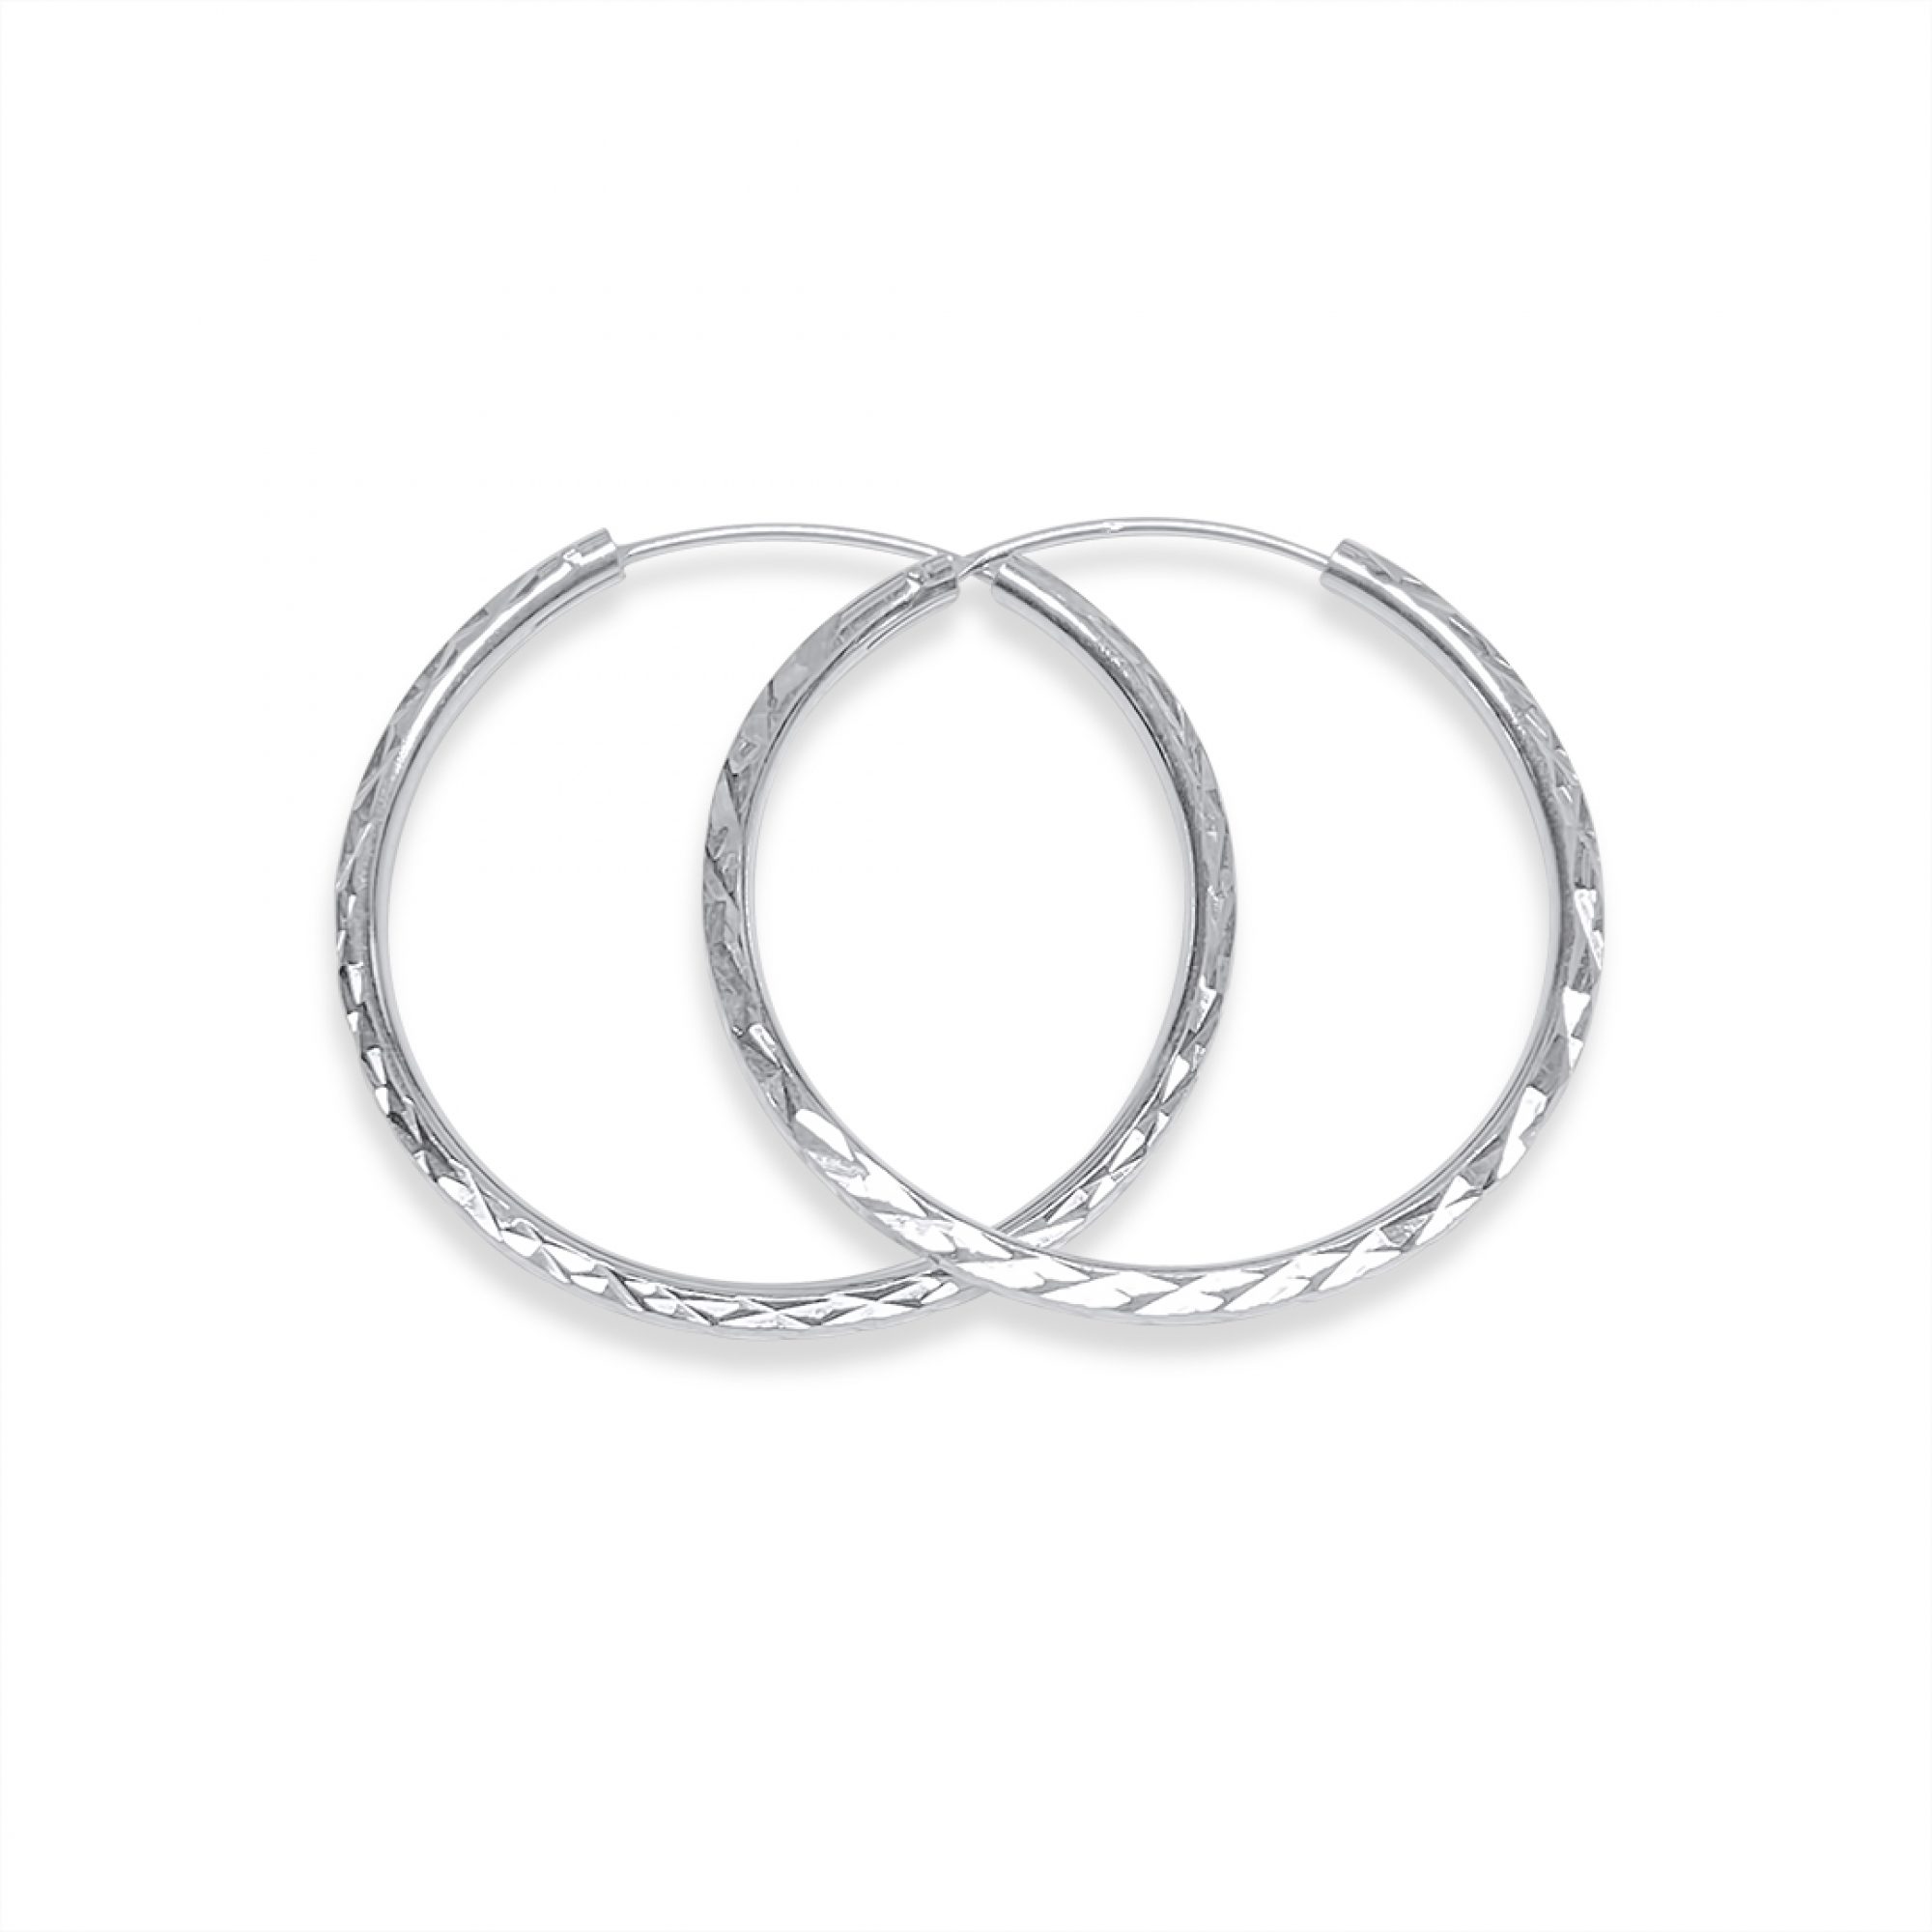 Silver engraved hoops (35.5mm)